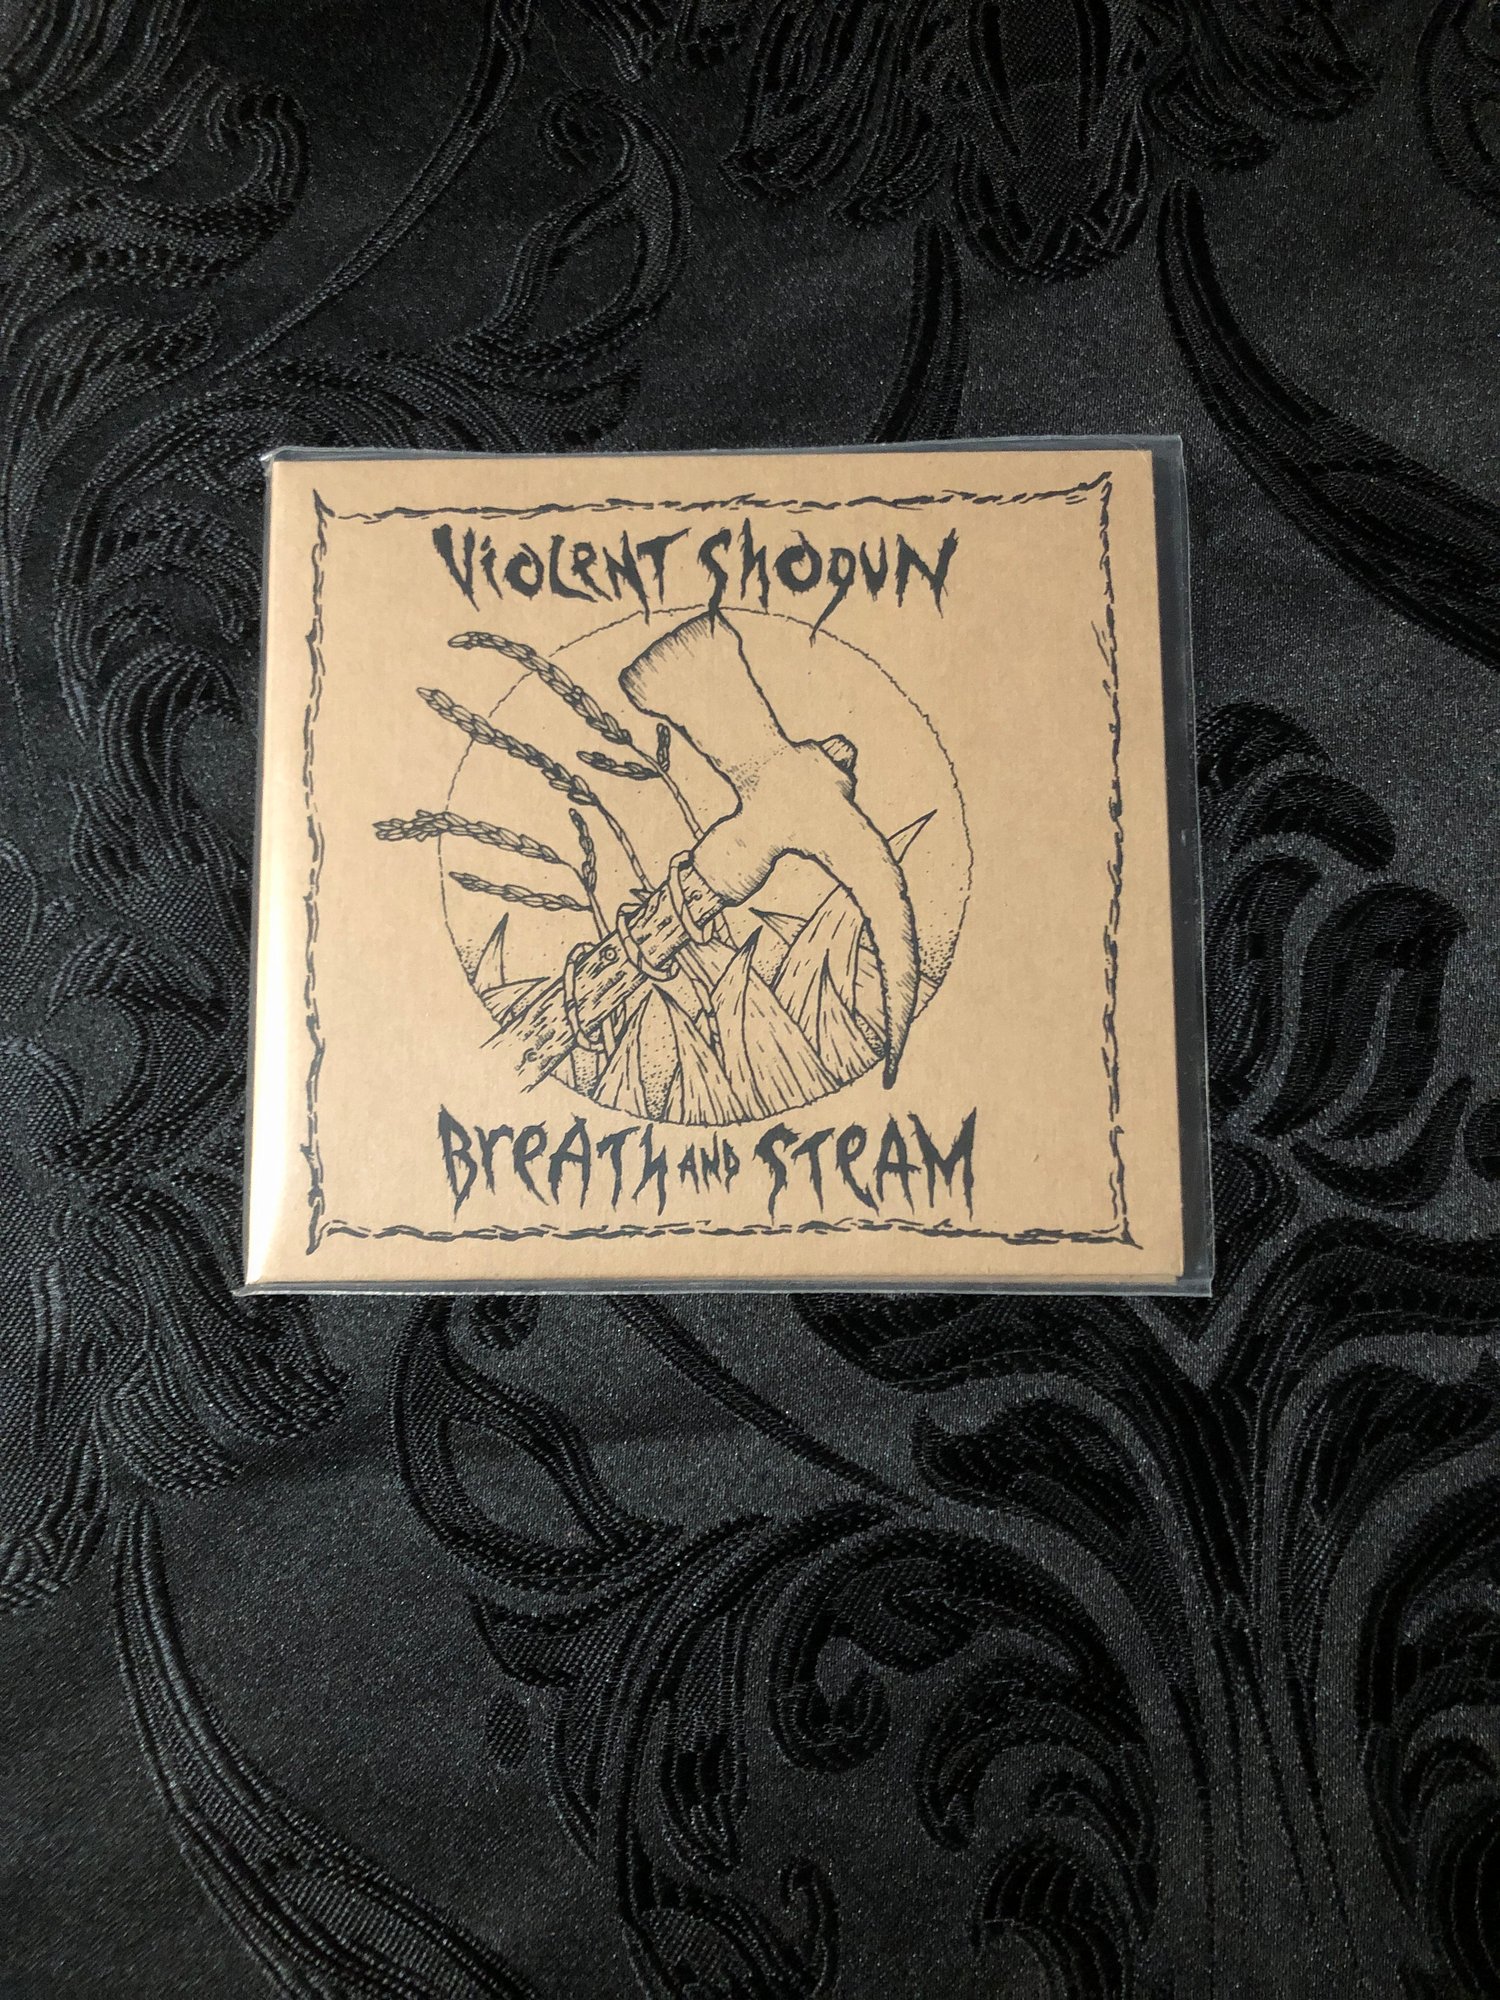 Violent Shogun - Breath And Steam CD (Satatuhatta)